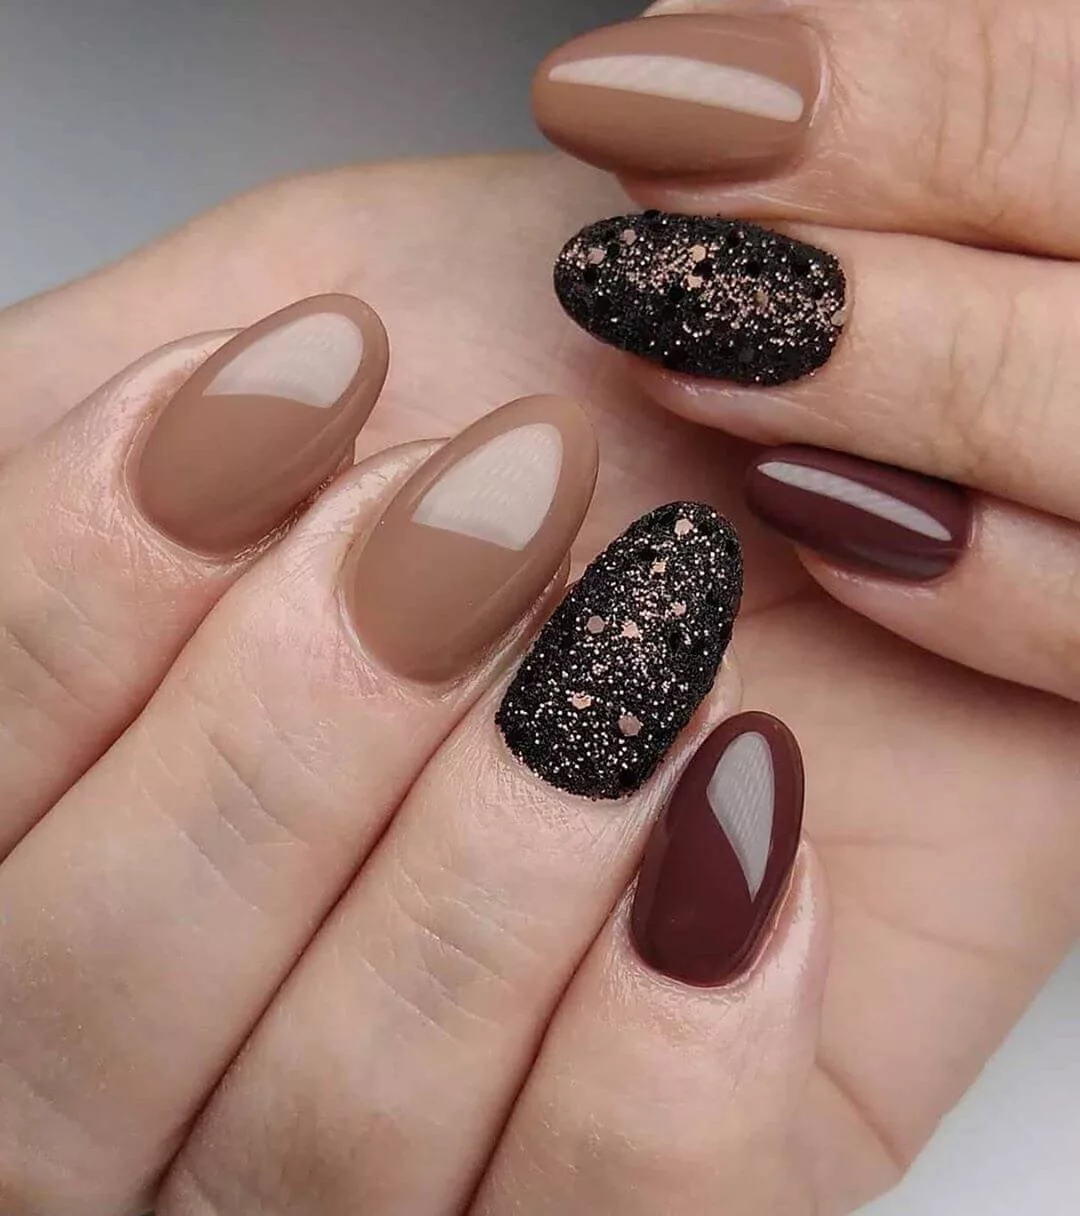 2022 nails Marble Nails Glamorous Xtendos Nails Luxury nails Stiletto nails Rose Quartz Press on nails Classy